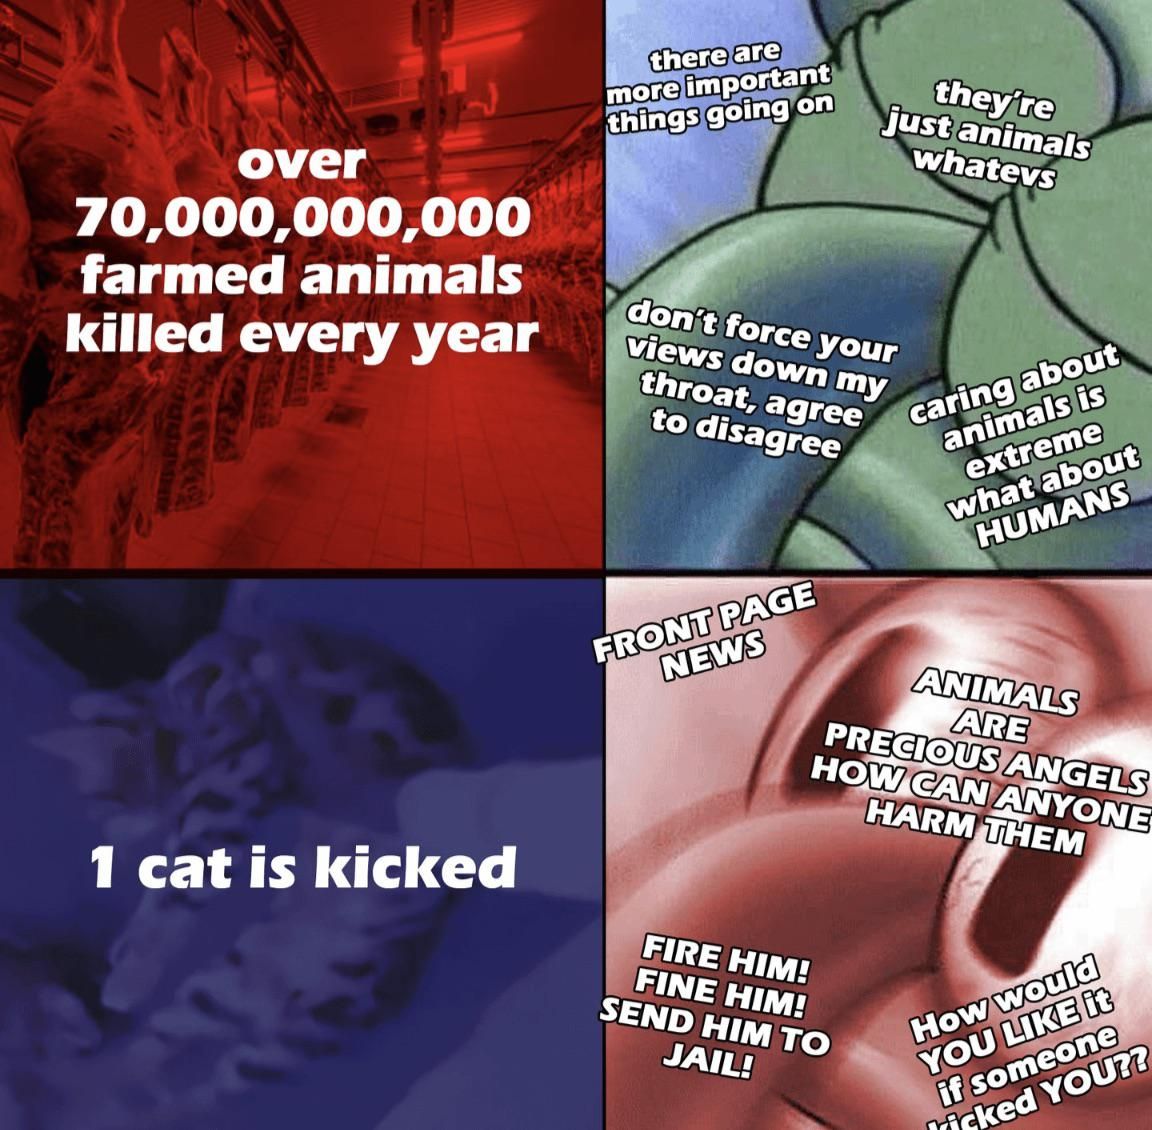 Millions of intelligent animals killed for food: I sleep. Cat kicked: Real shit?